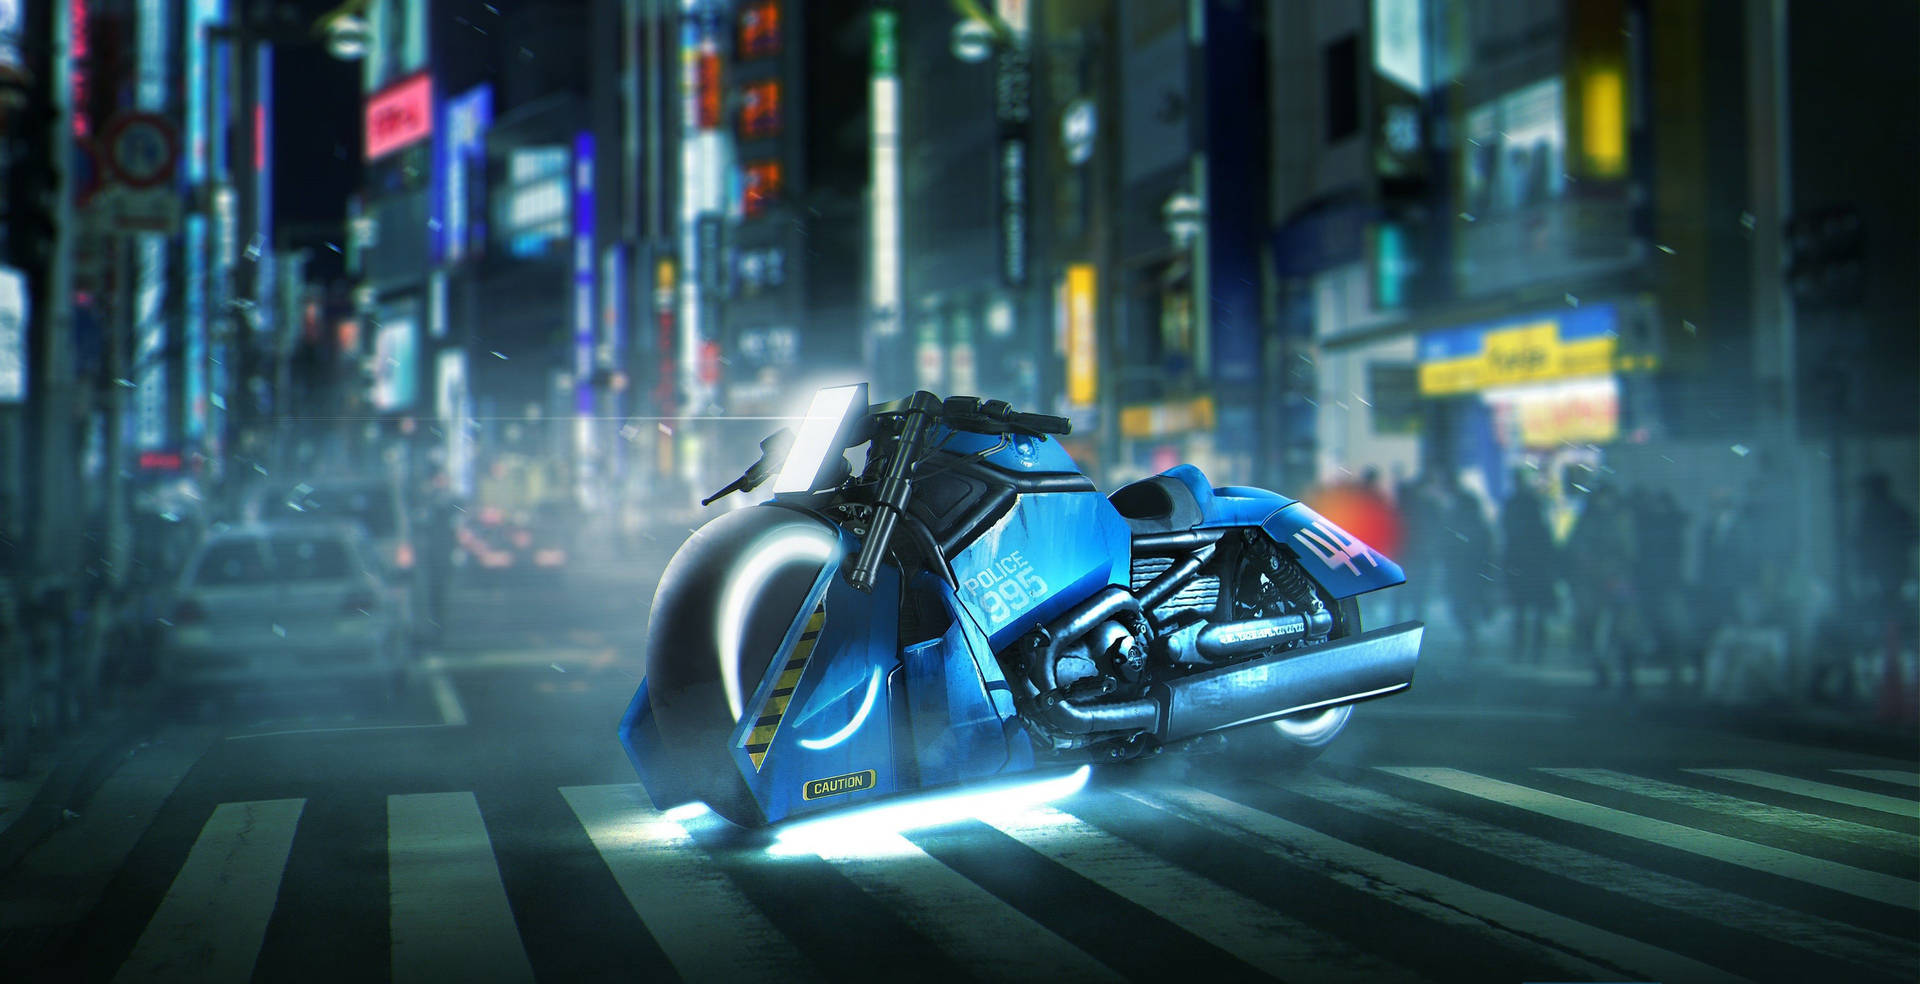 Blade Runner Futuristic Motorcycle Harley Davidson Background